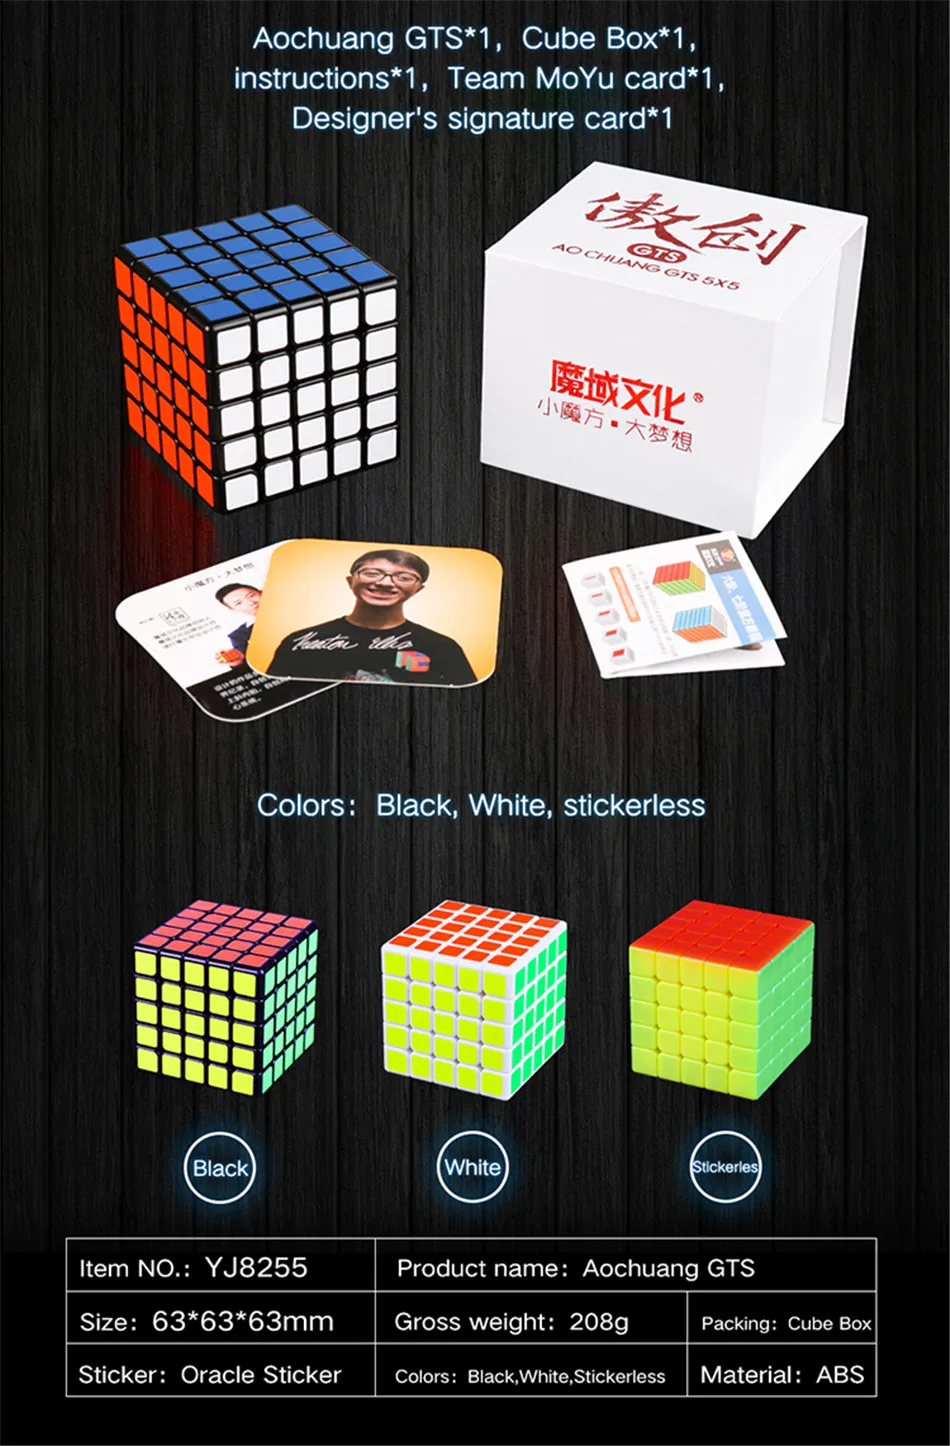 Moyu 5x5x5 cube AoChuang GTS/GTS M 5x5x5 Магнитный магический куб moyu 5x5 скоростной куб moyu GTS m 5x5 Головоломка Куб moyu 5x5 cubo